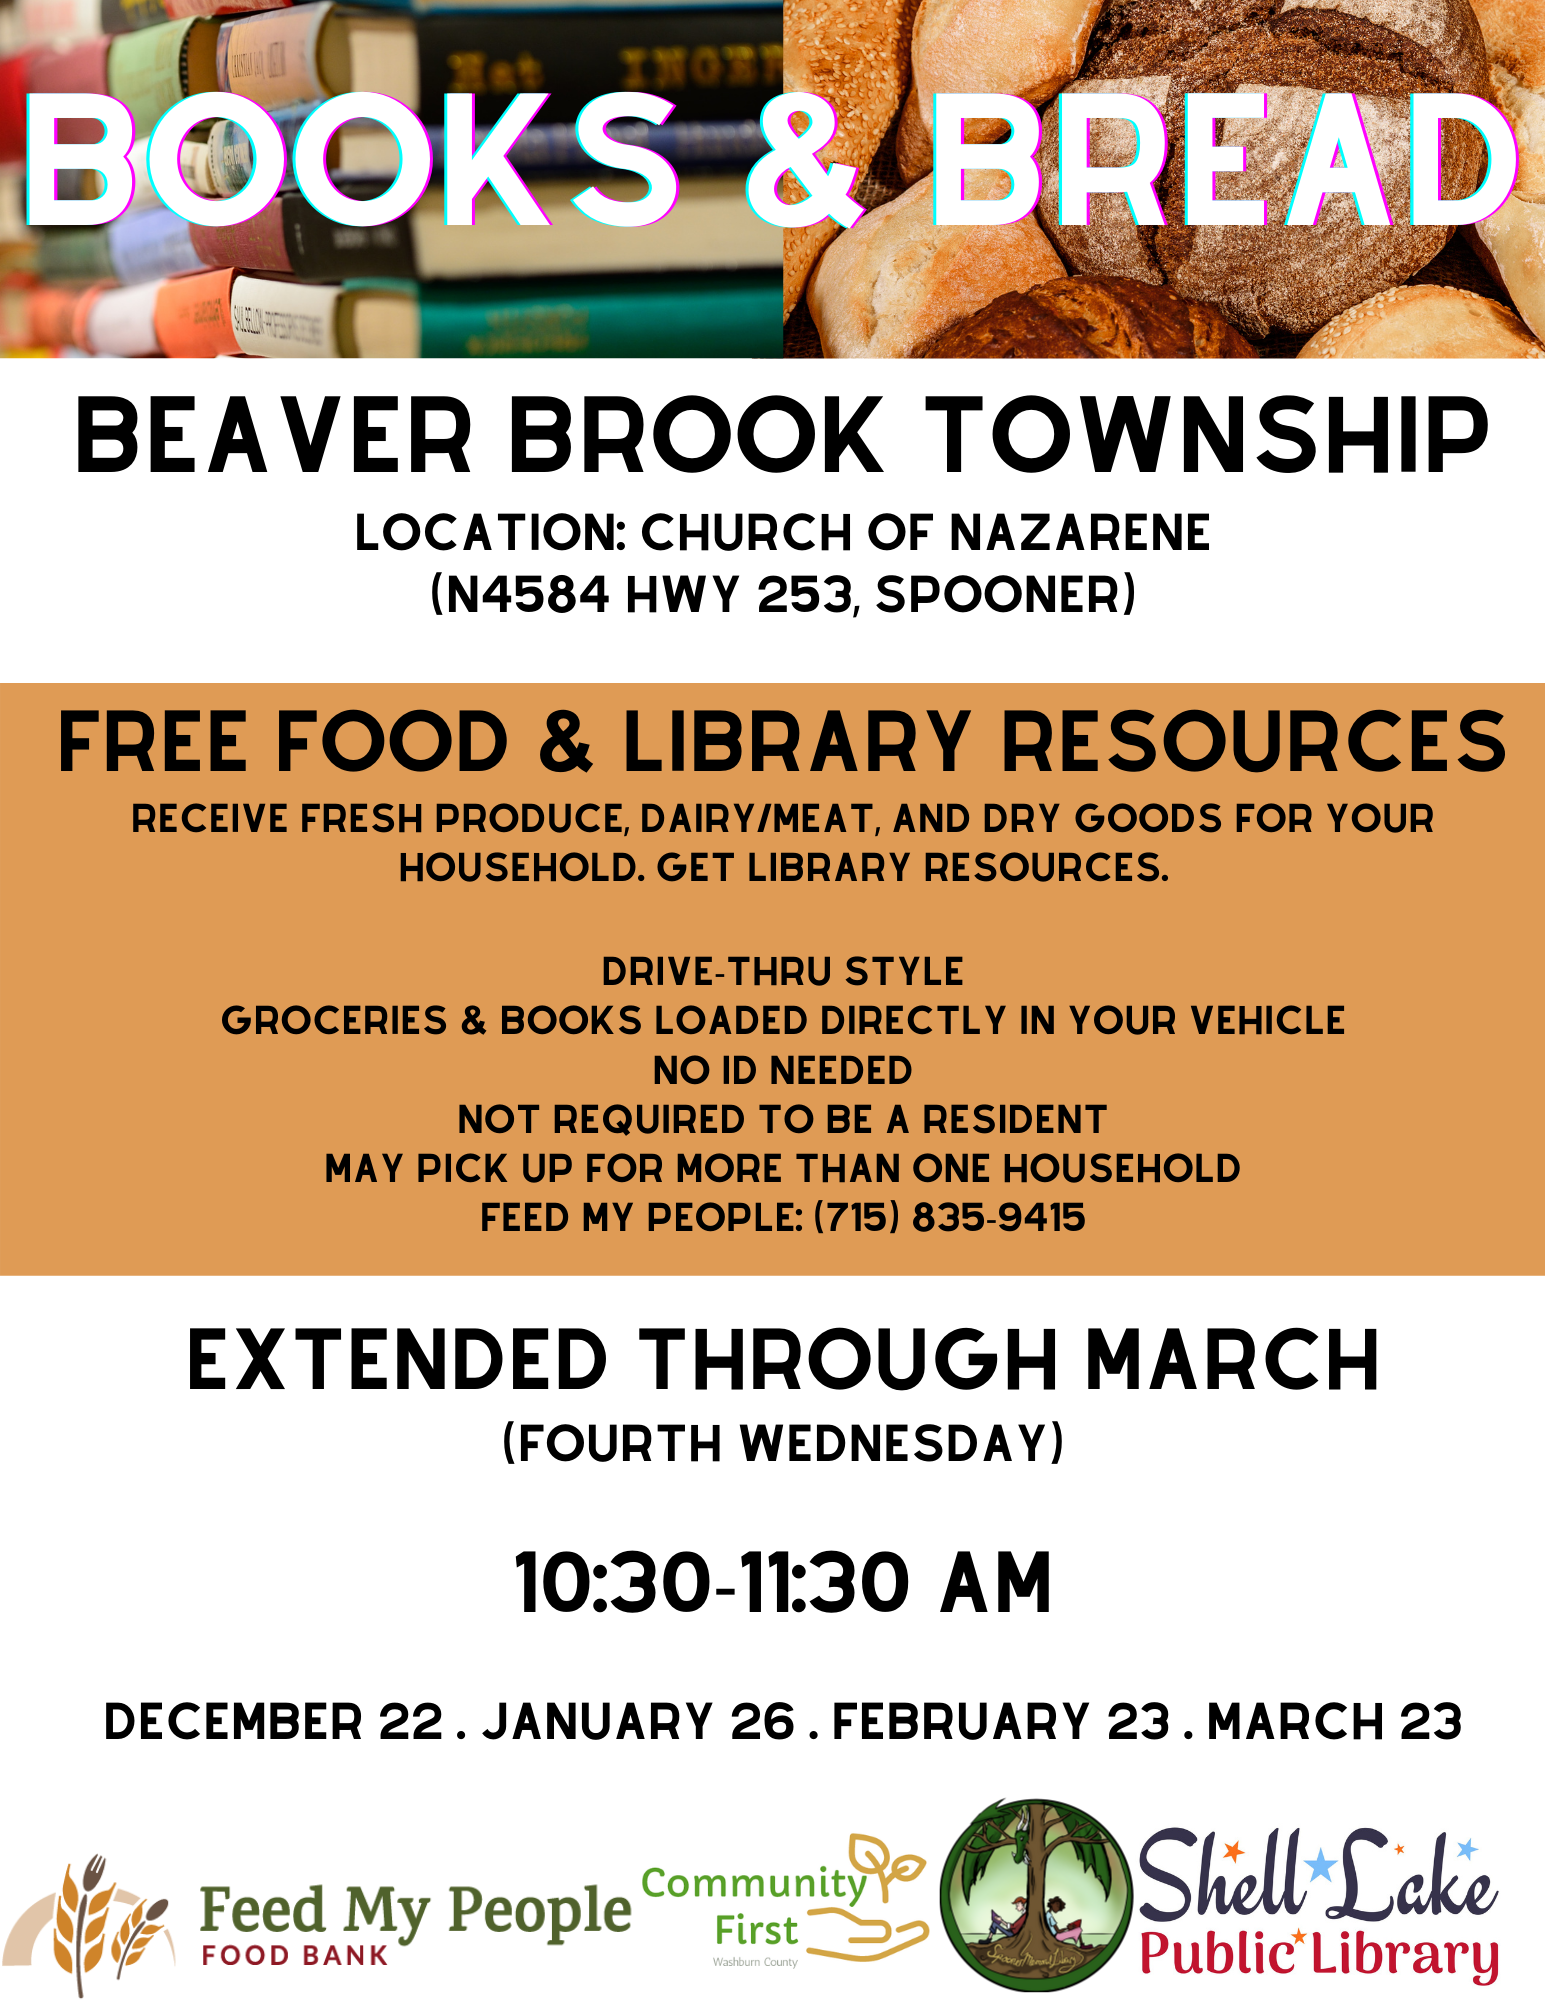 Beaver Brook Books & Bread